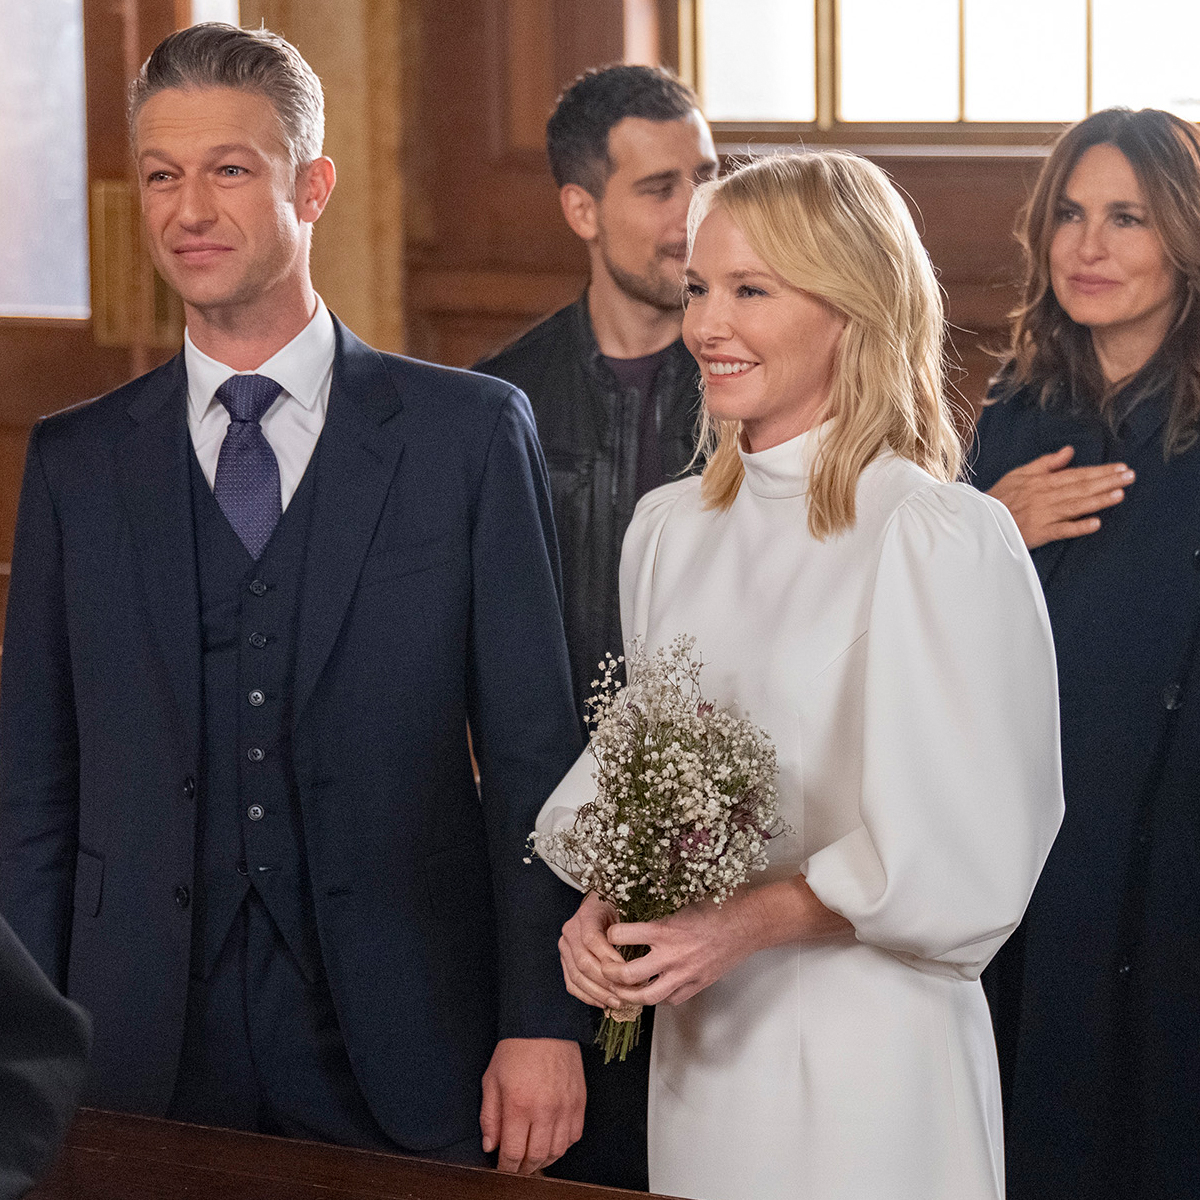 See Kelli Giddish’s Law & Order: SVU Wedding in Sneak Peek at Her Final Episode – E! Online